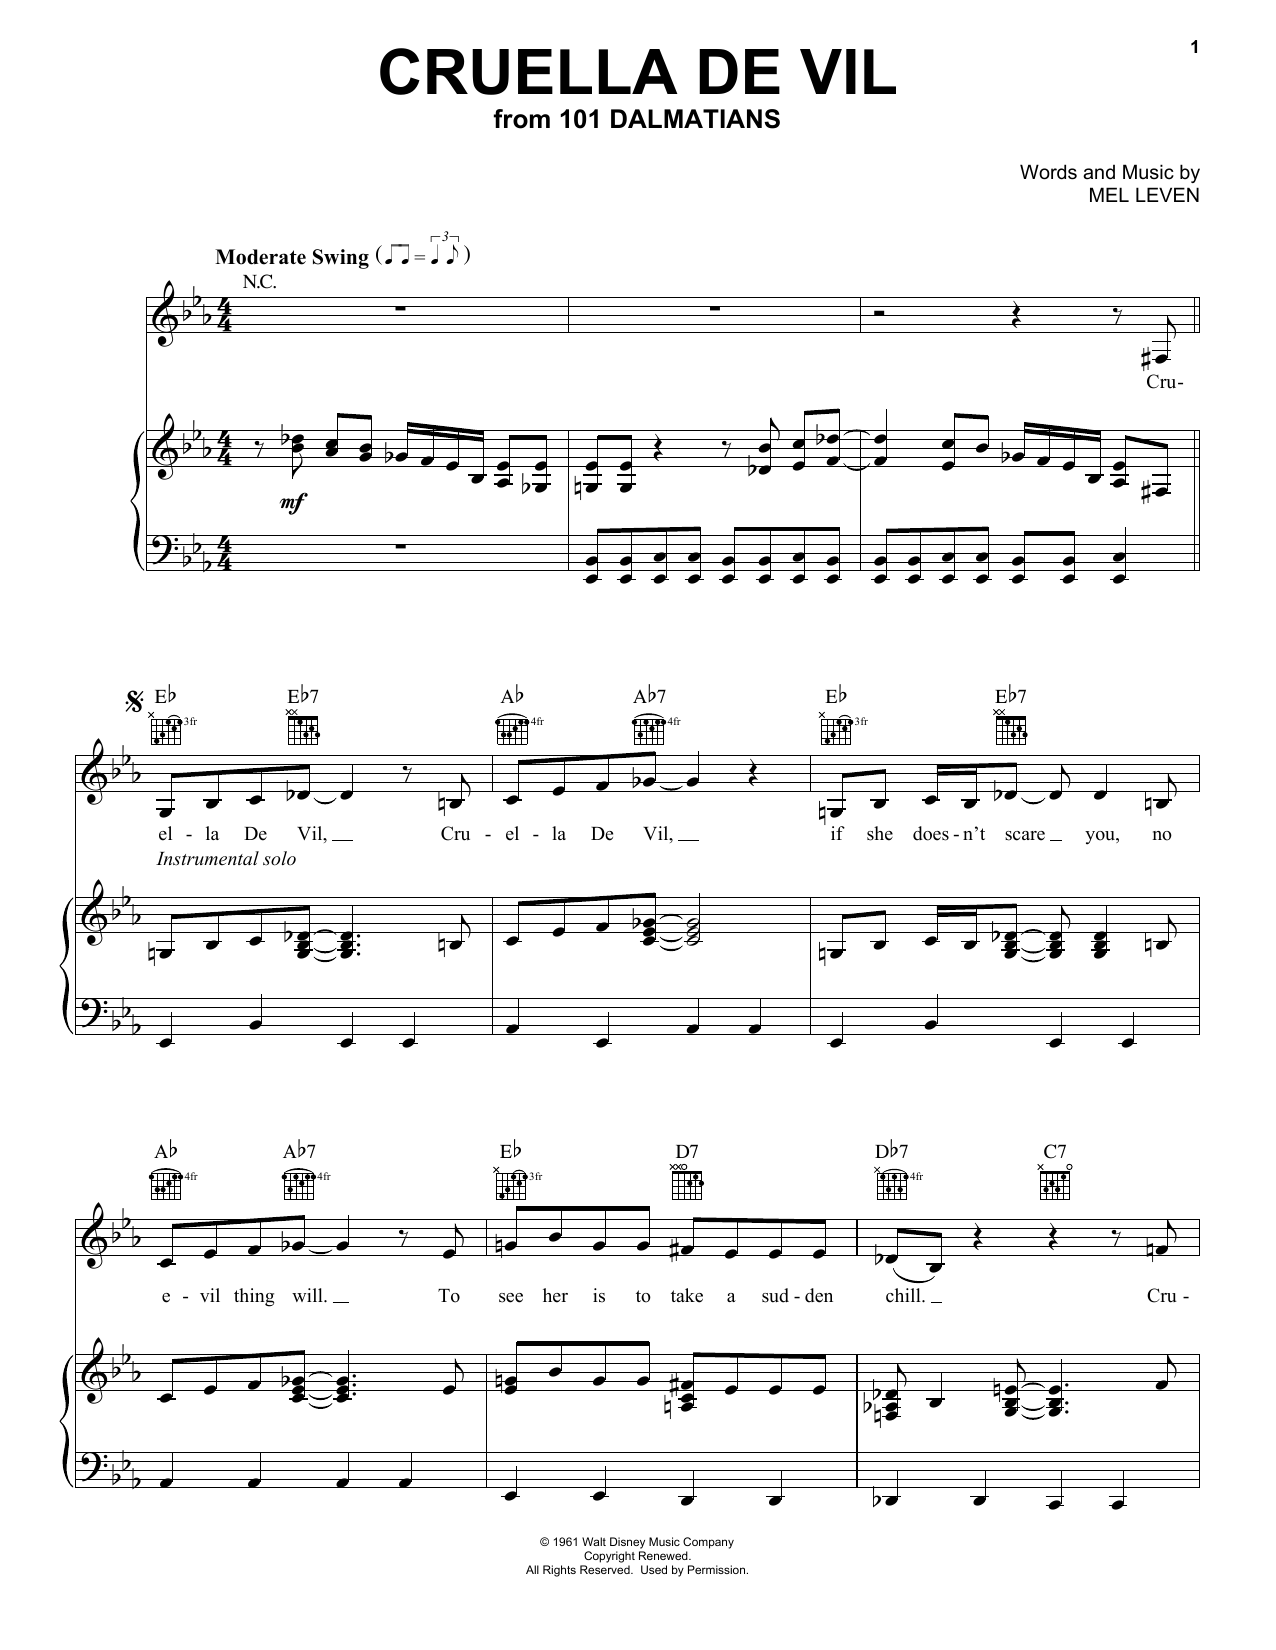 Download Mel Leven Cruella De Vil Sheet Music and learn how to play Flute PDF digital score in minutes